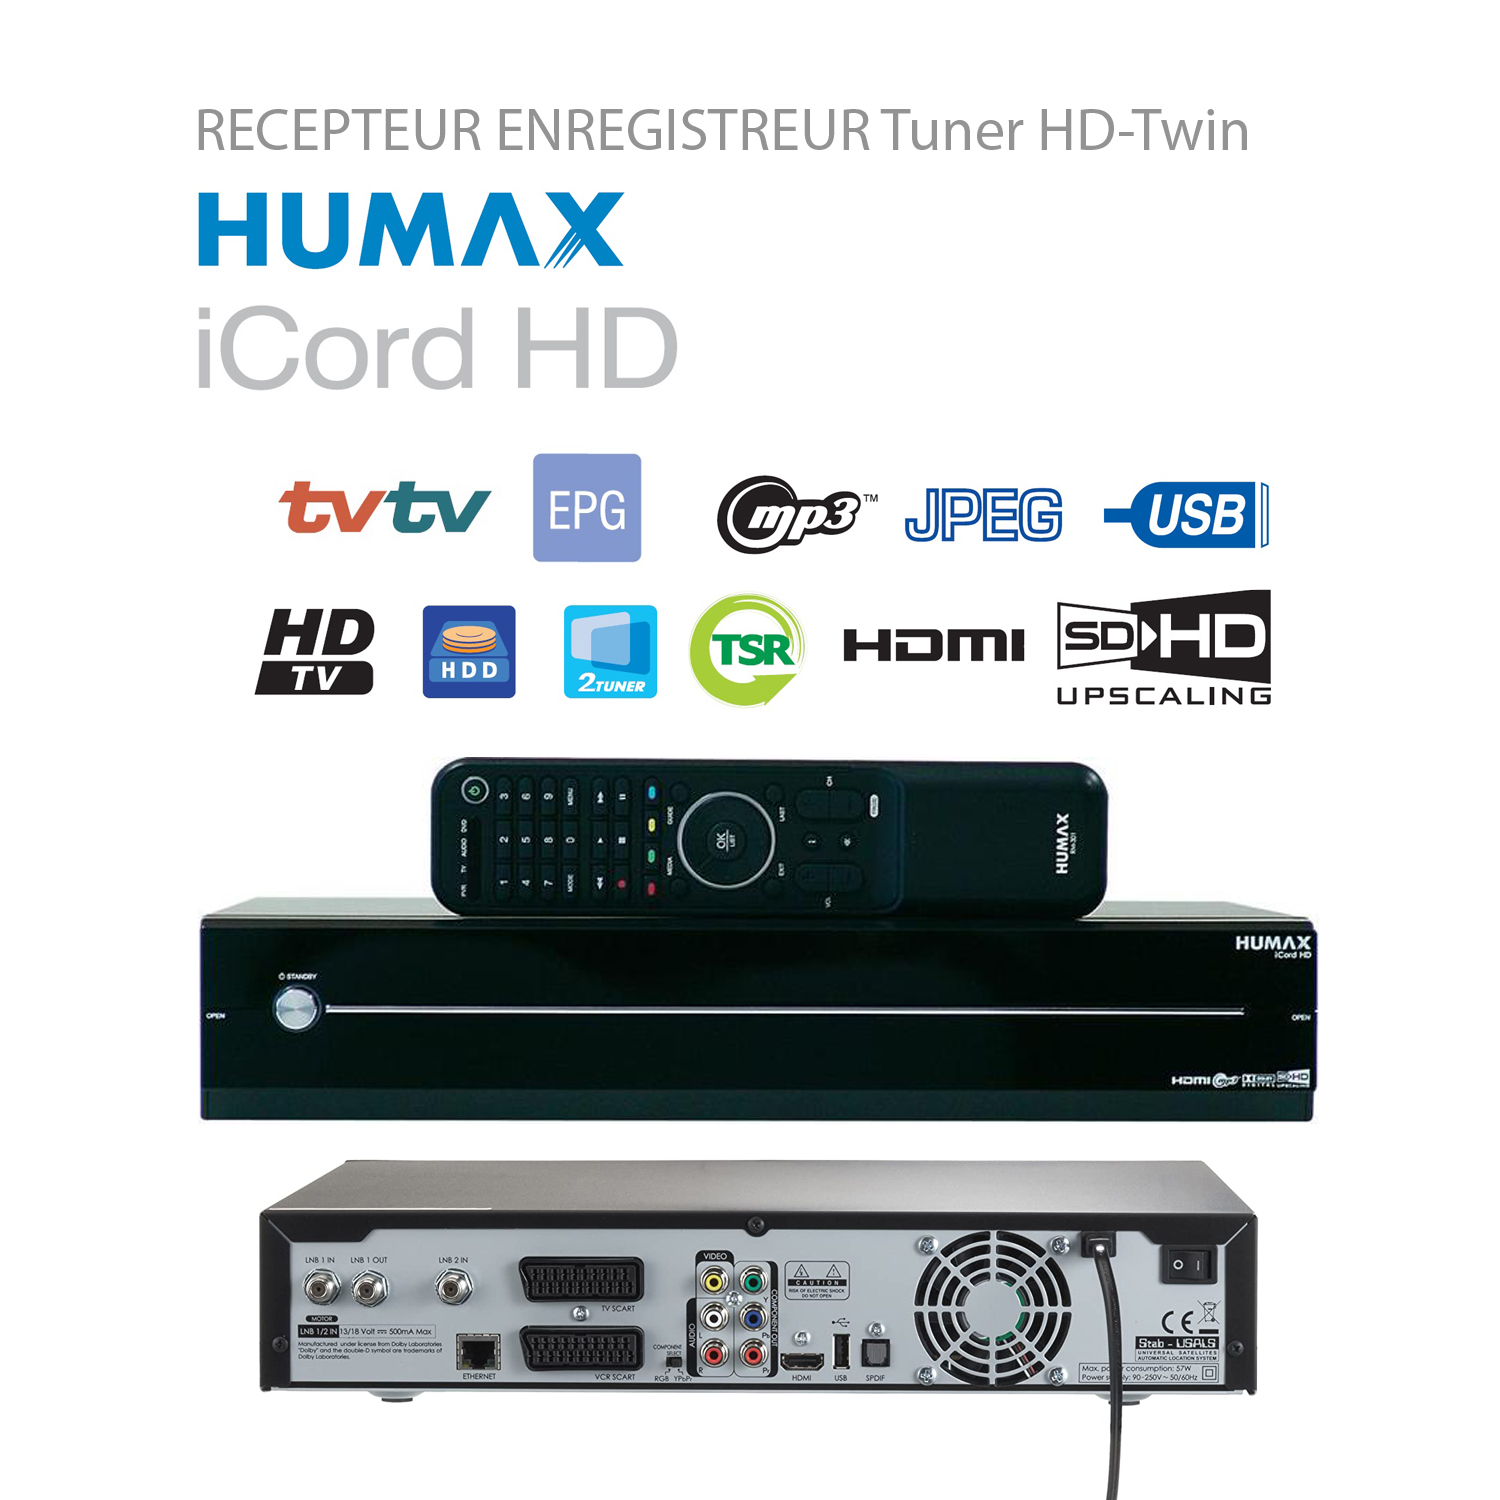 Rcepteur Enregistreur Double Tuner HD Humax iCord HD 500GB - Fonction Timeshift Multimdia Enregistrement 4 programmes Freesat HD